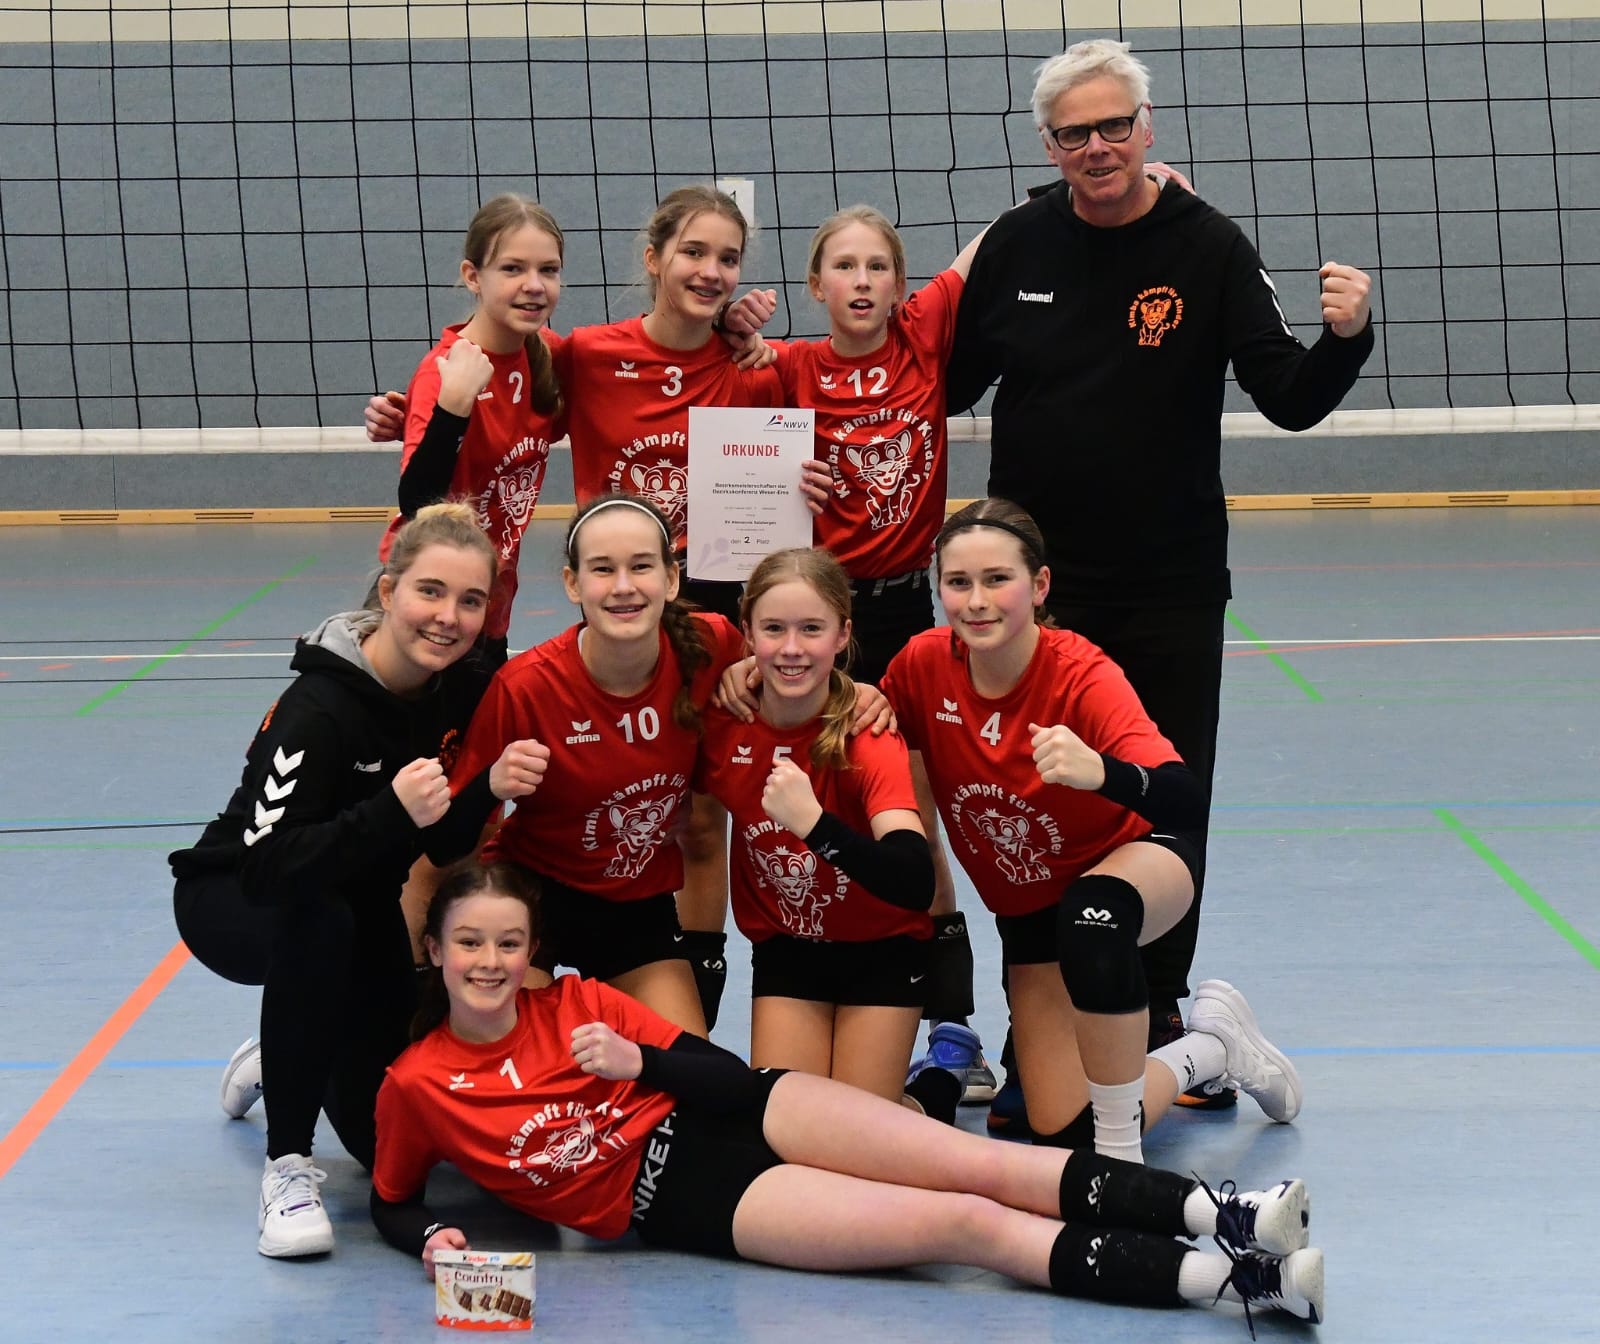 Jugend Volleyball Bezirksmeisterschaft Weser-Ems der U14 Juniorinnen in Salzbergen